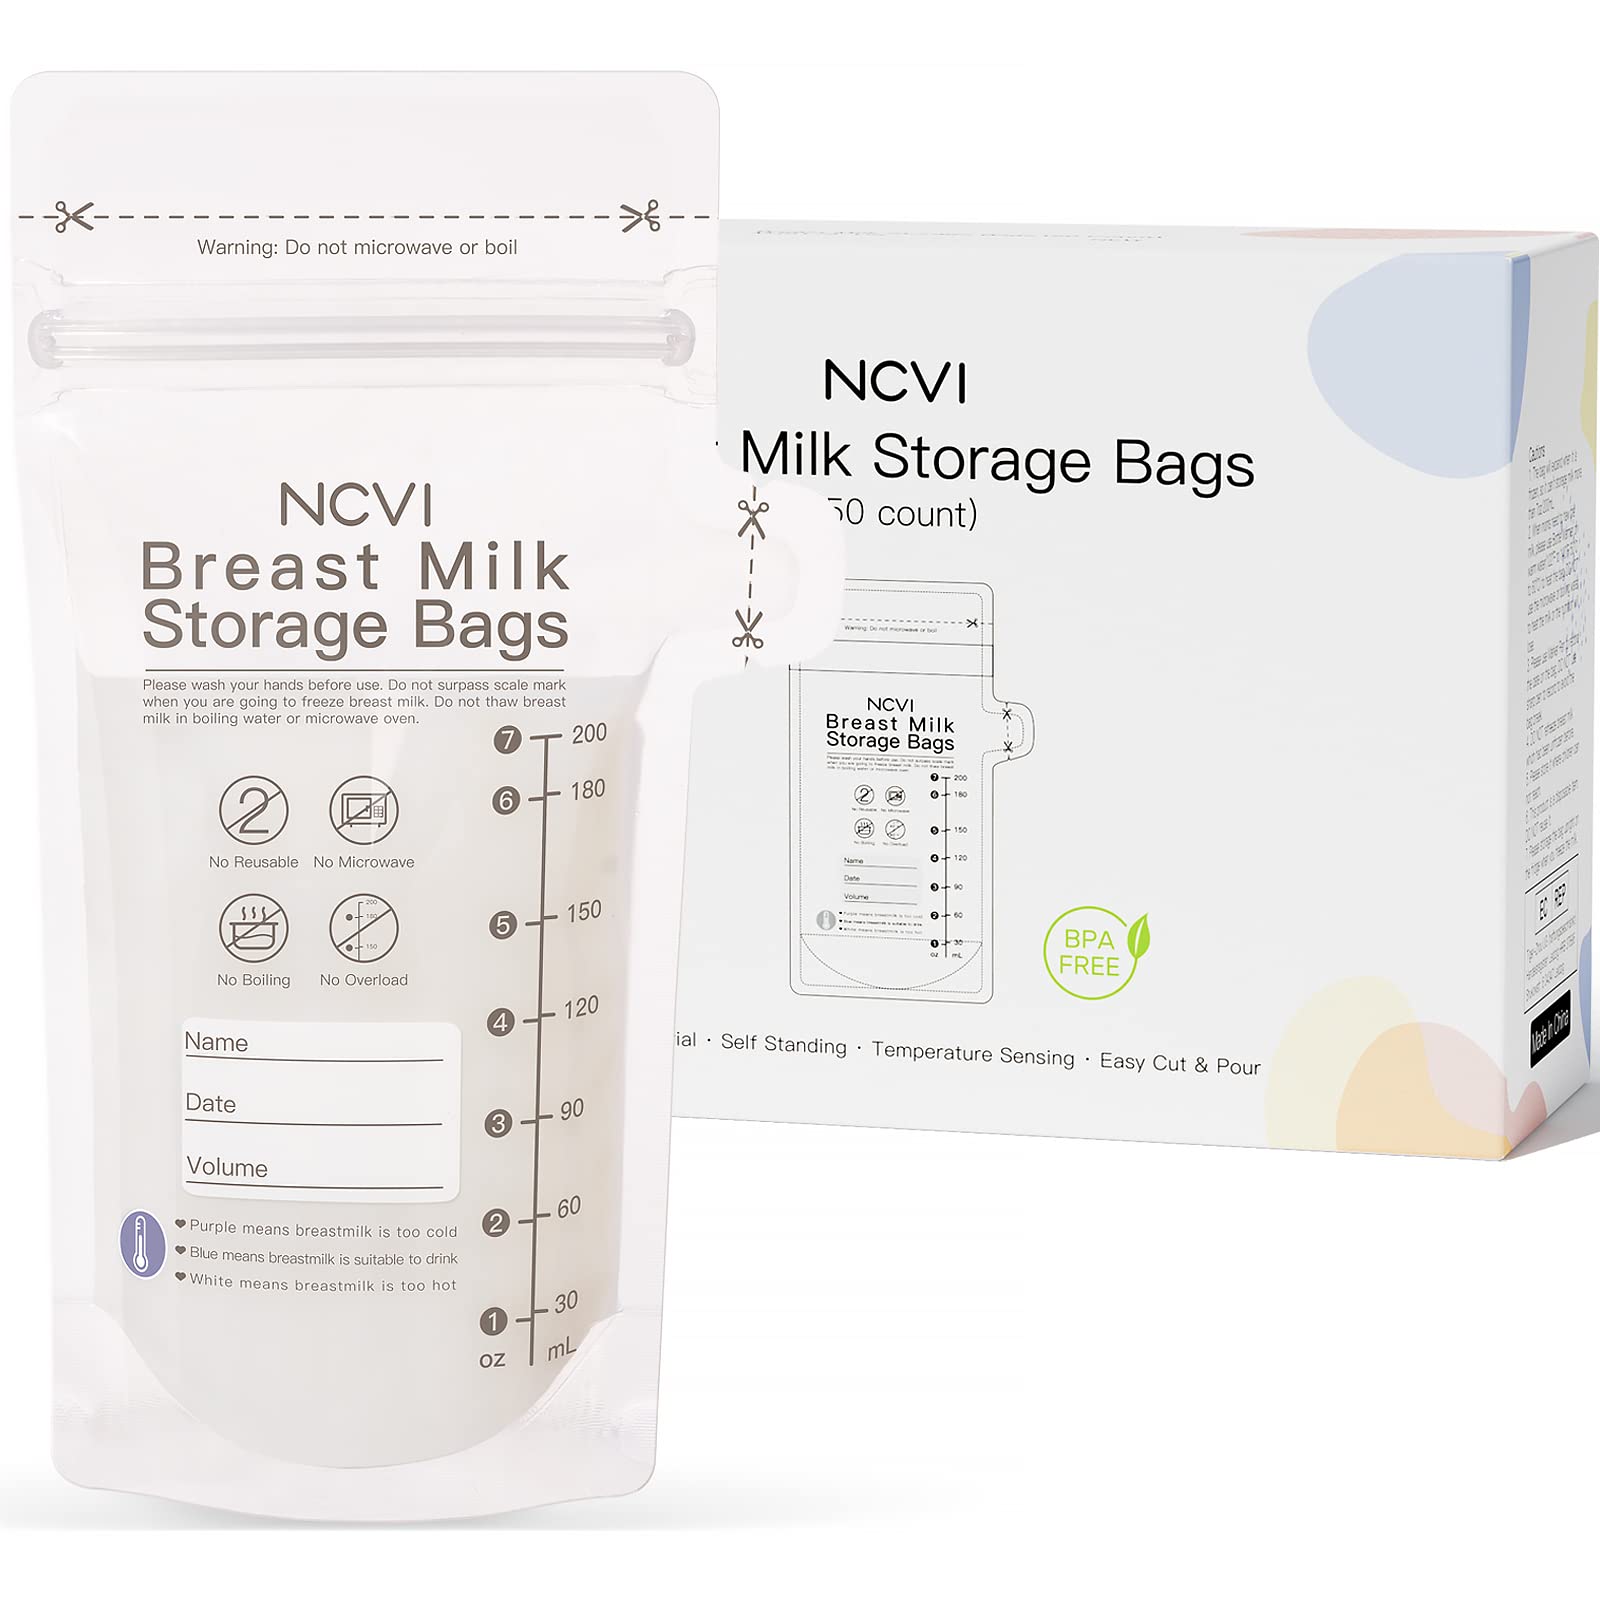 NCVI Breastmilk Storage Bags, 50 Count Milk Storage Bags for Breastfeeding, 7oz Breast Milk Storage Bags with Temp-Sensing, Doub